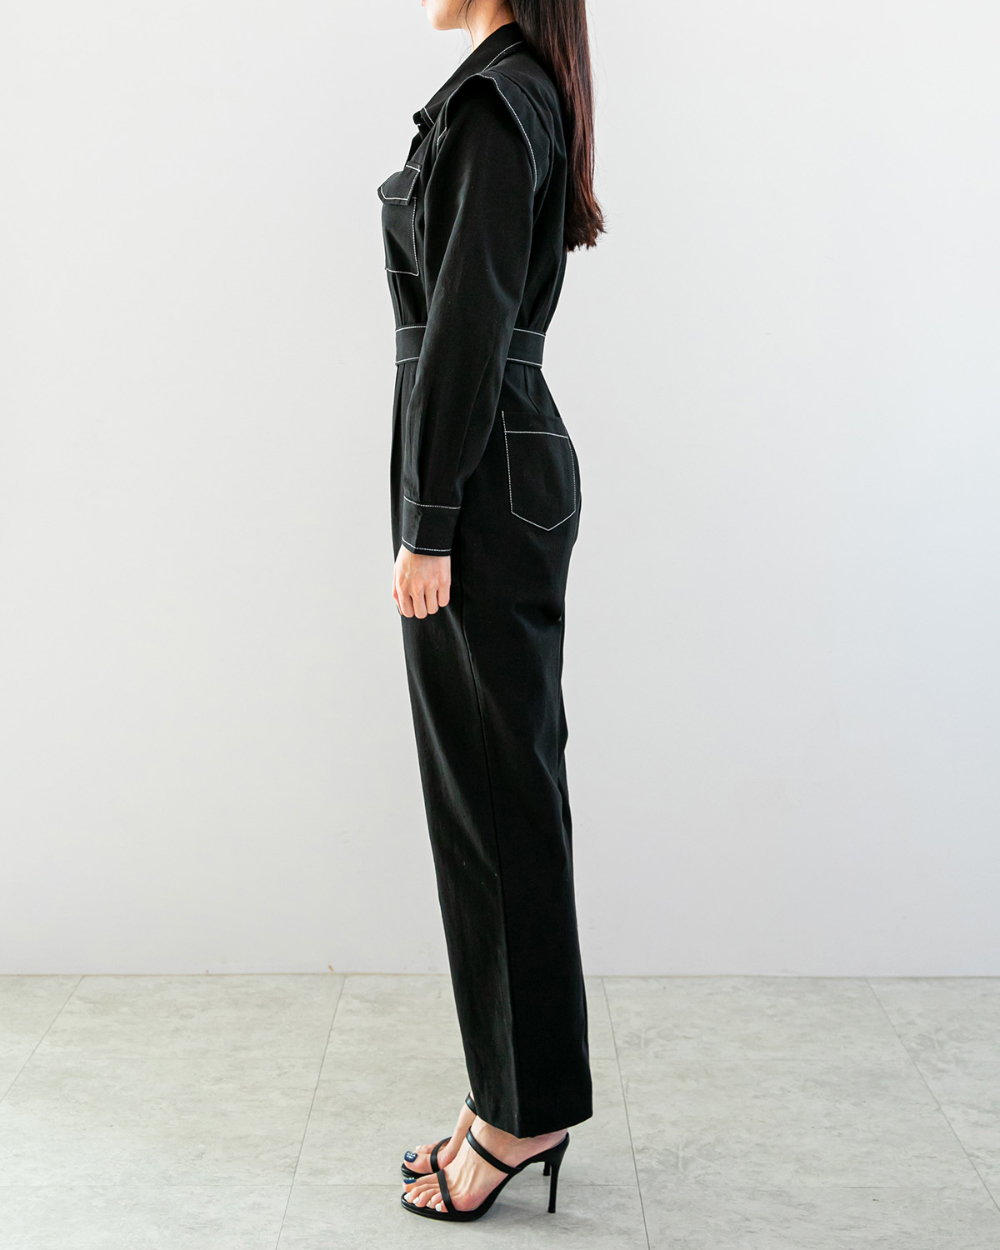 suspenders skirt/pants model image-S1L9